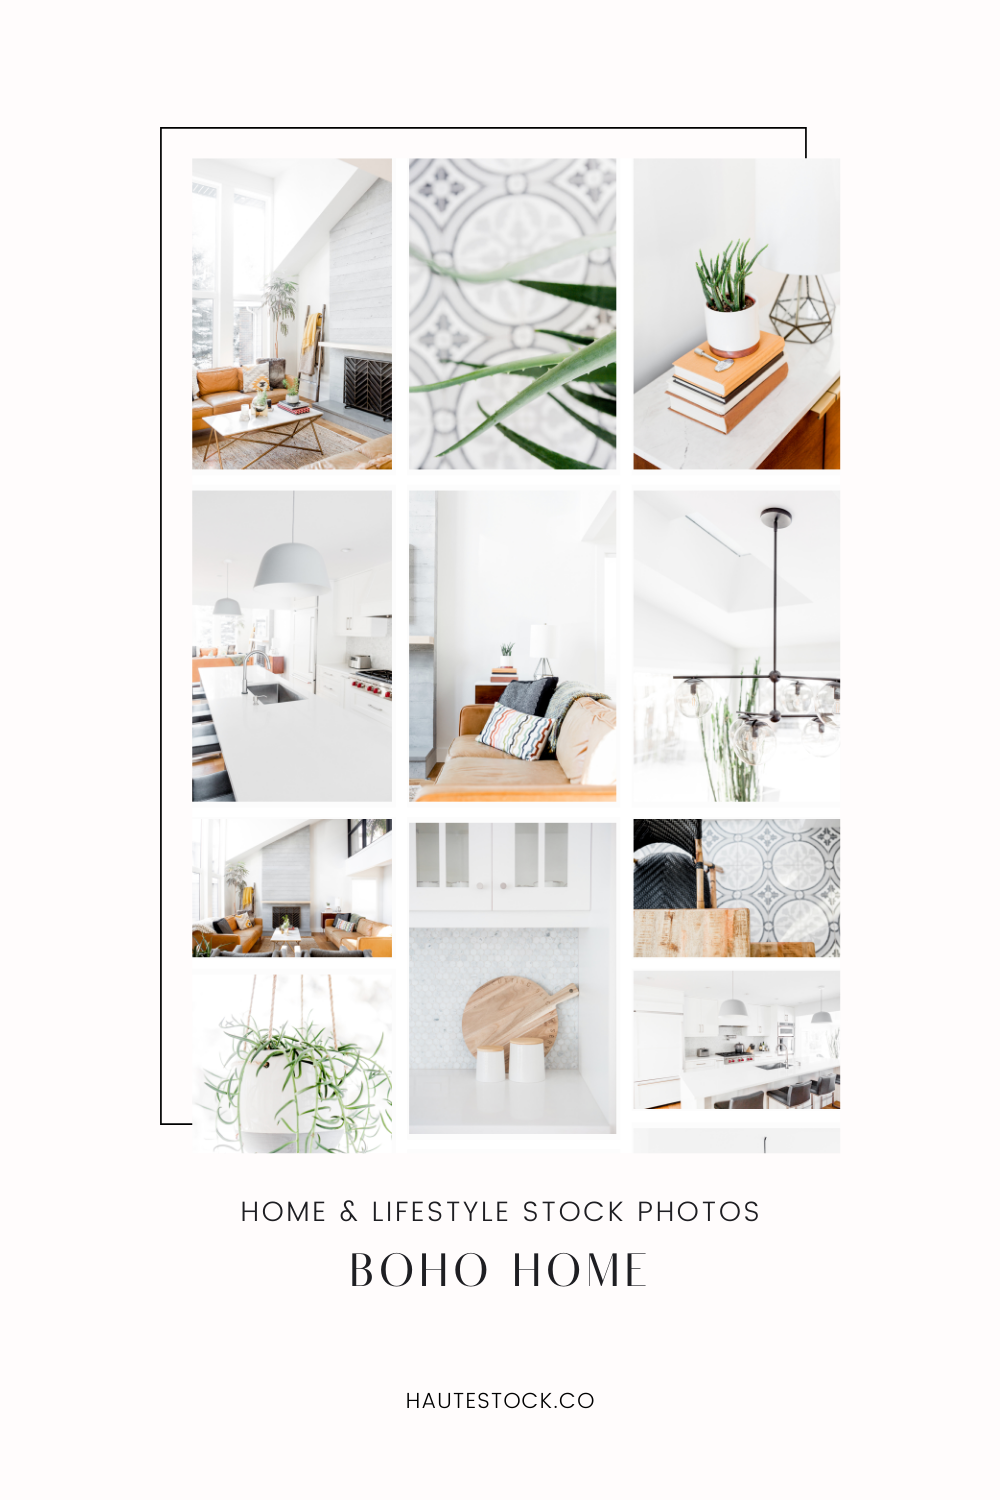 Boho home stock photos and interior stock imagery